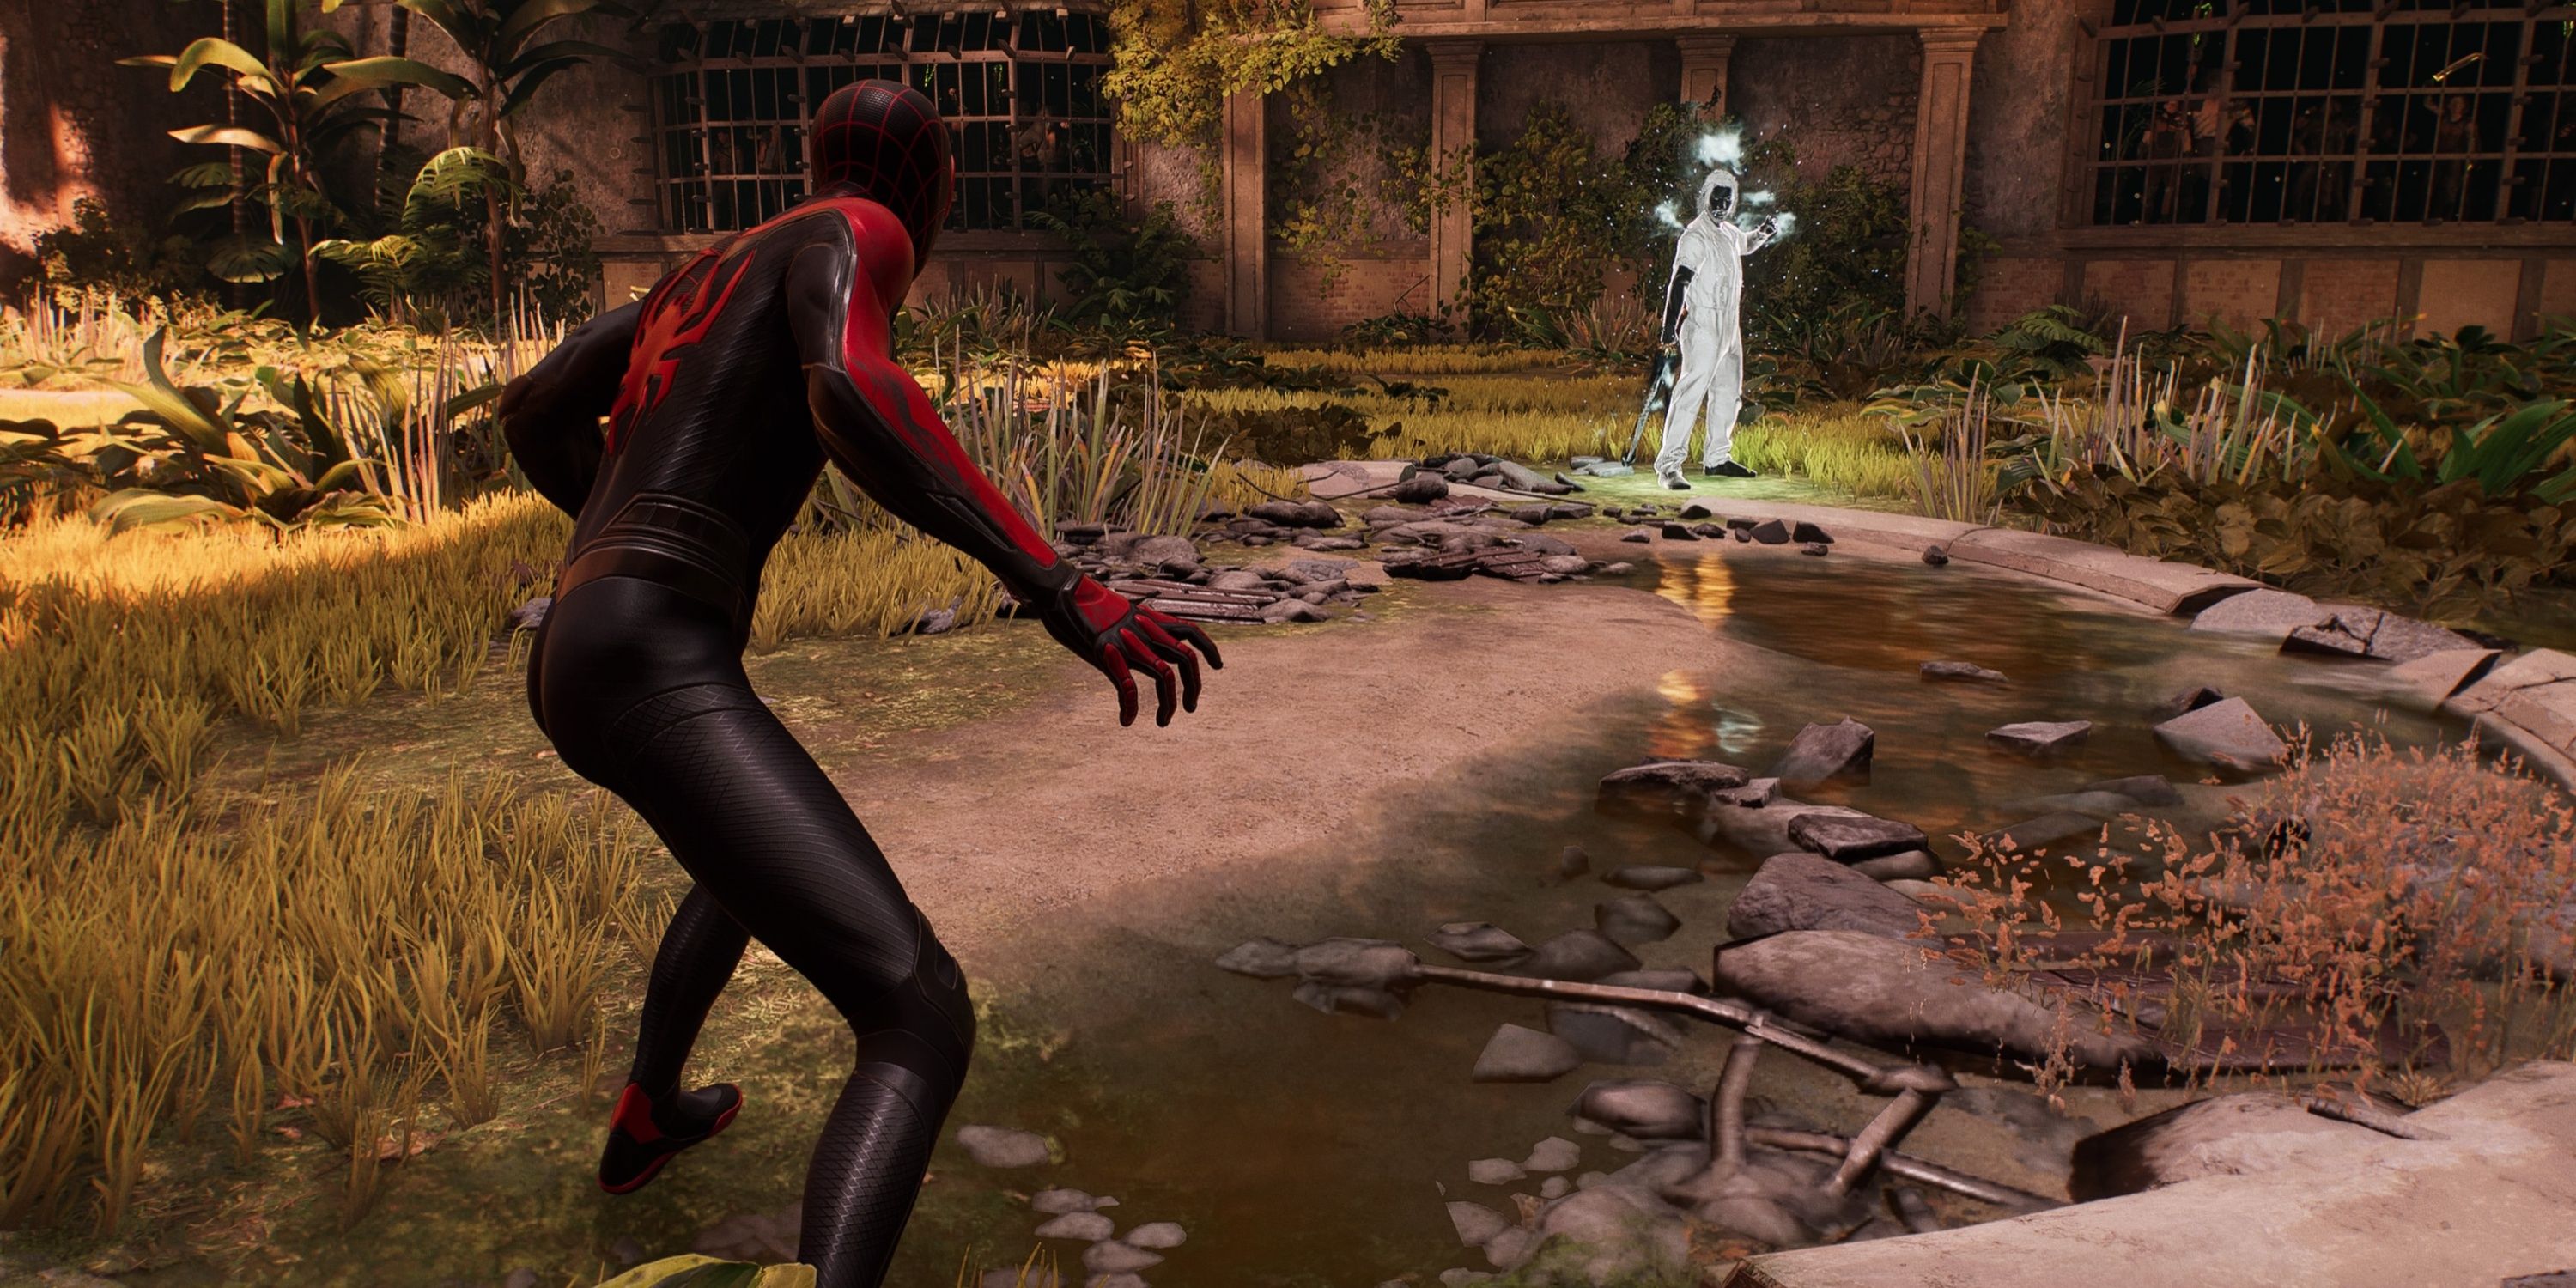 spider-man fighting mister negative in kraven's arena